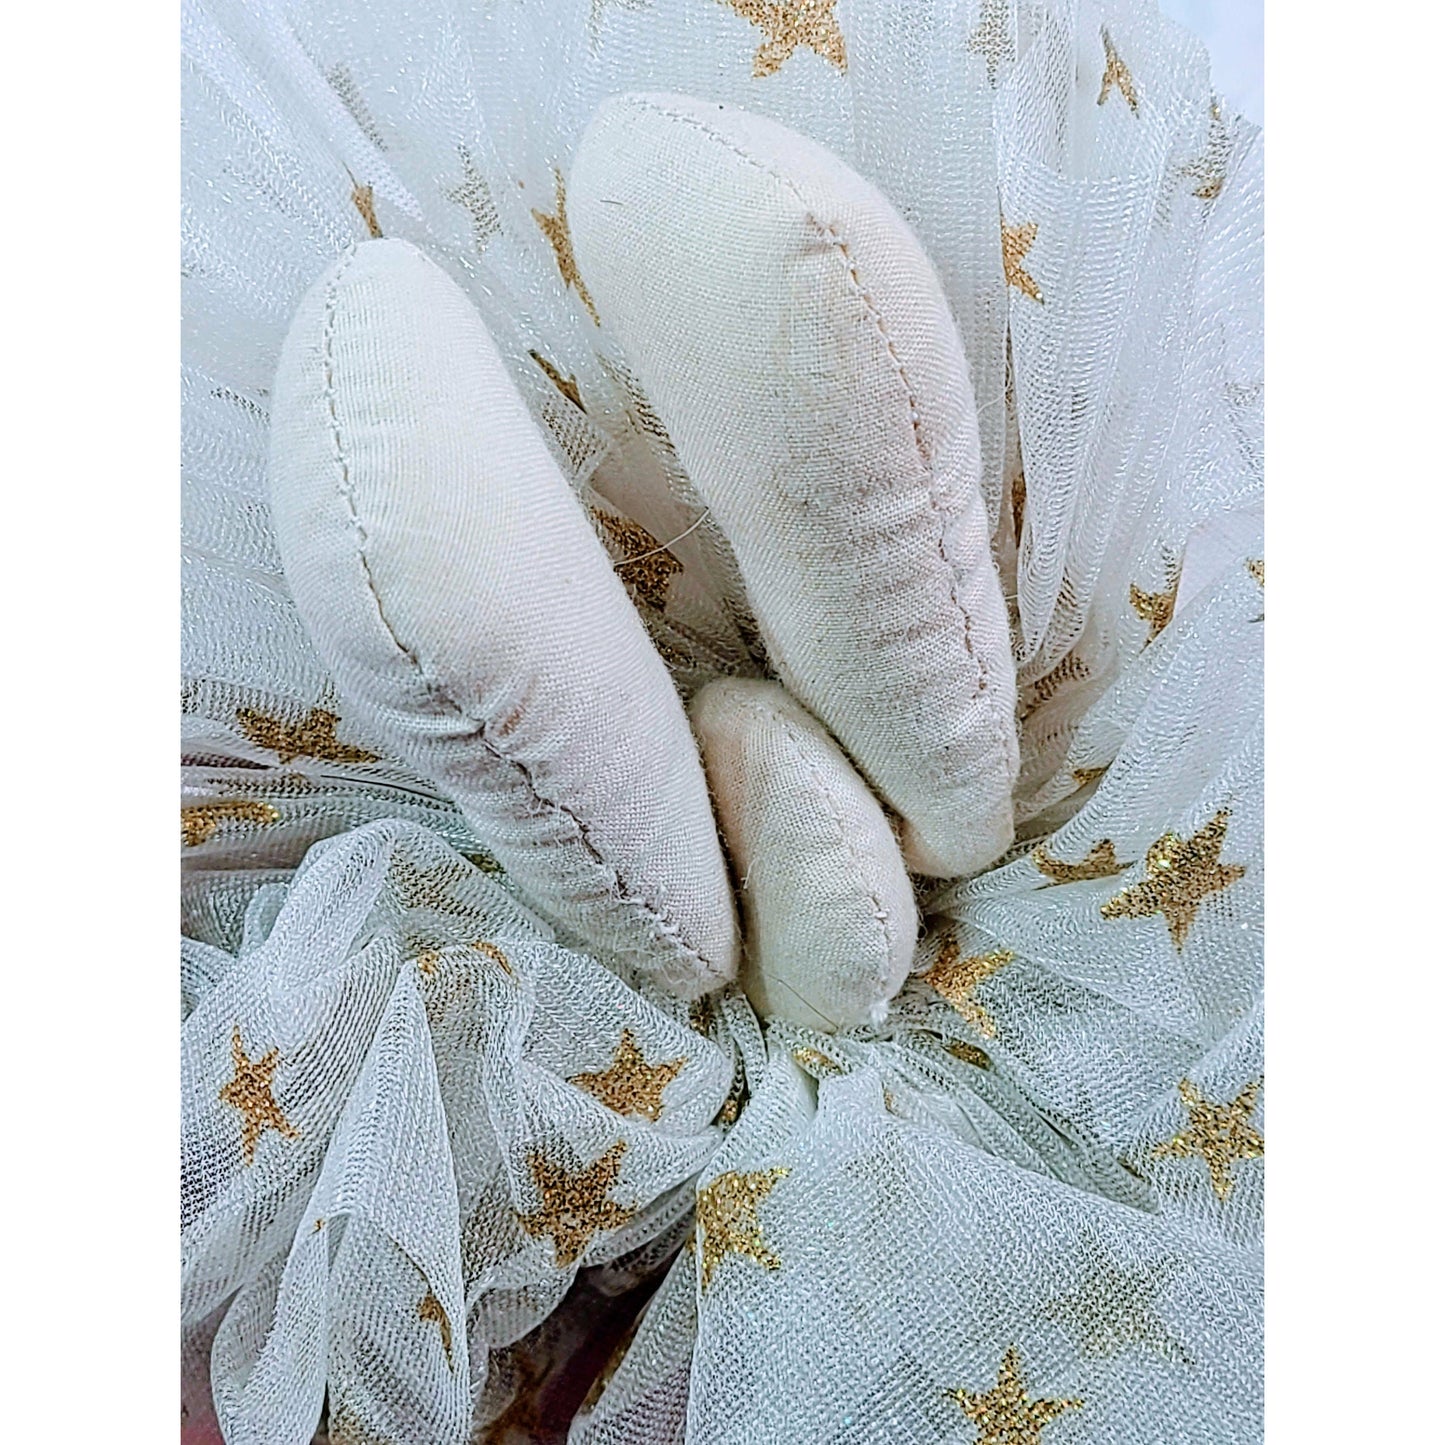 Handmade BUNNY Rag Doll ~ Primitive Shabby Aged Ivory Cloth Angel Bunny Girl Doll w/ Lace Satin Tulle Fabric